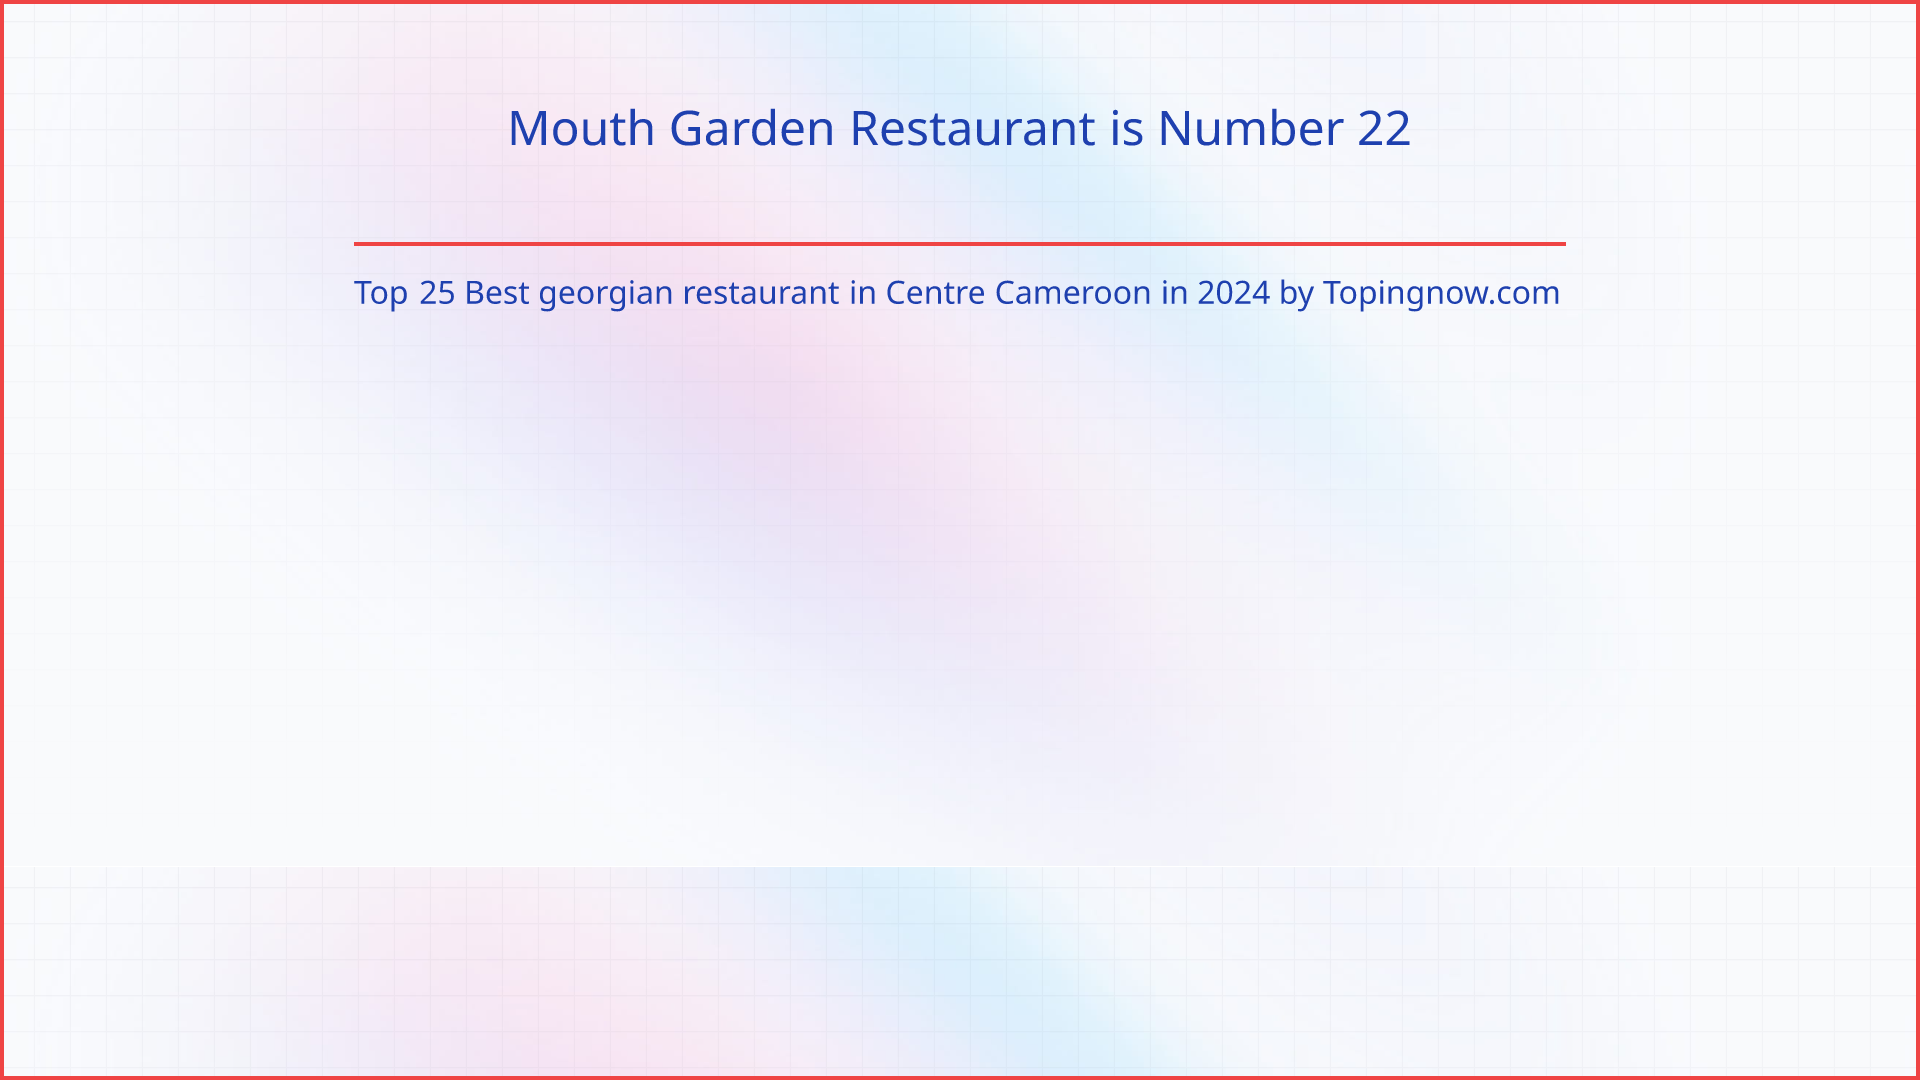 Mouth Garden Restaurant: Top 25 Best georgian restaurant in Centre Cameroon in 2024